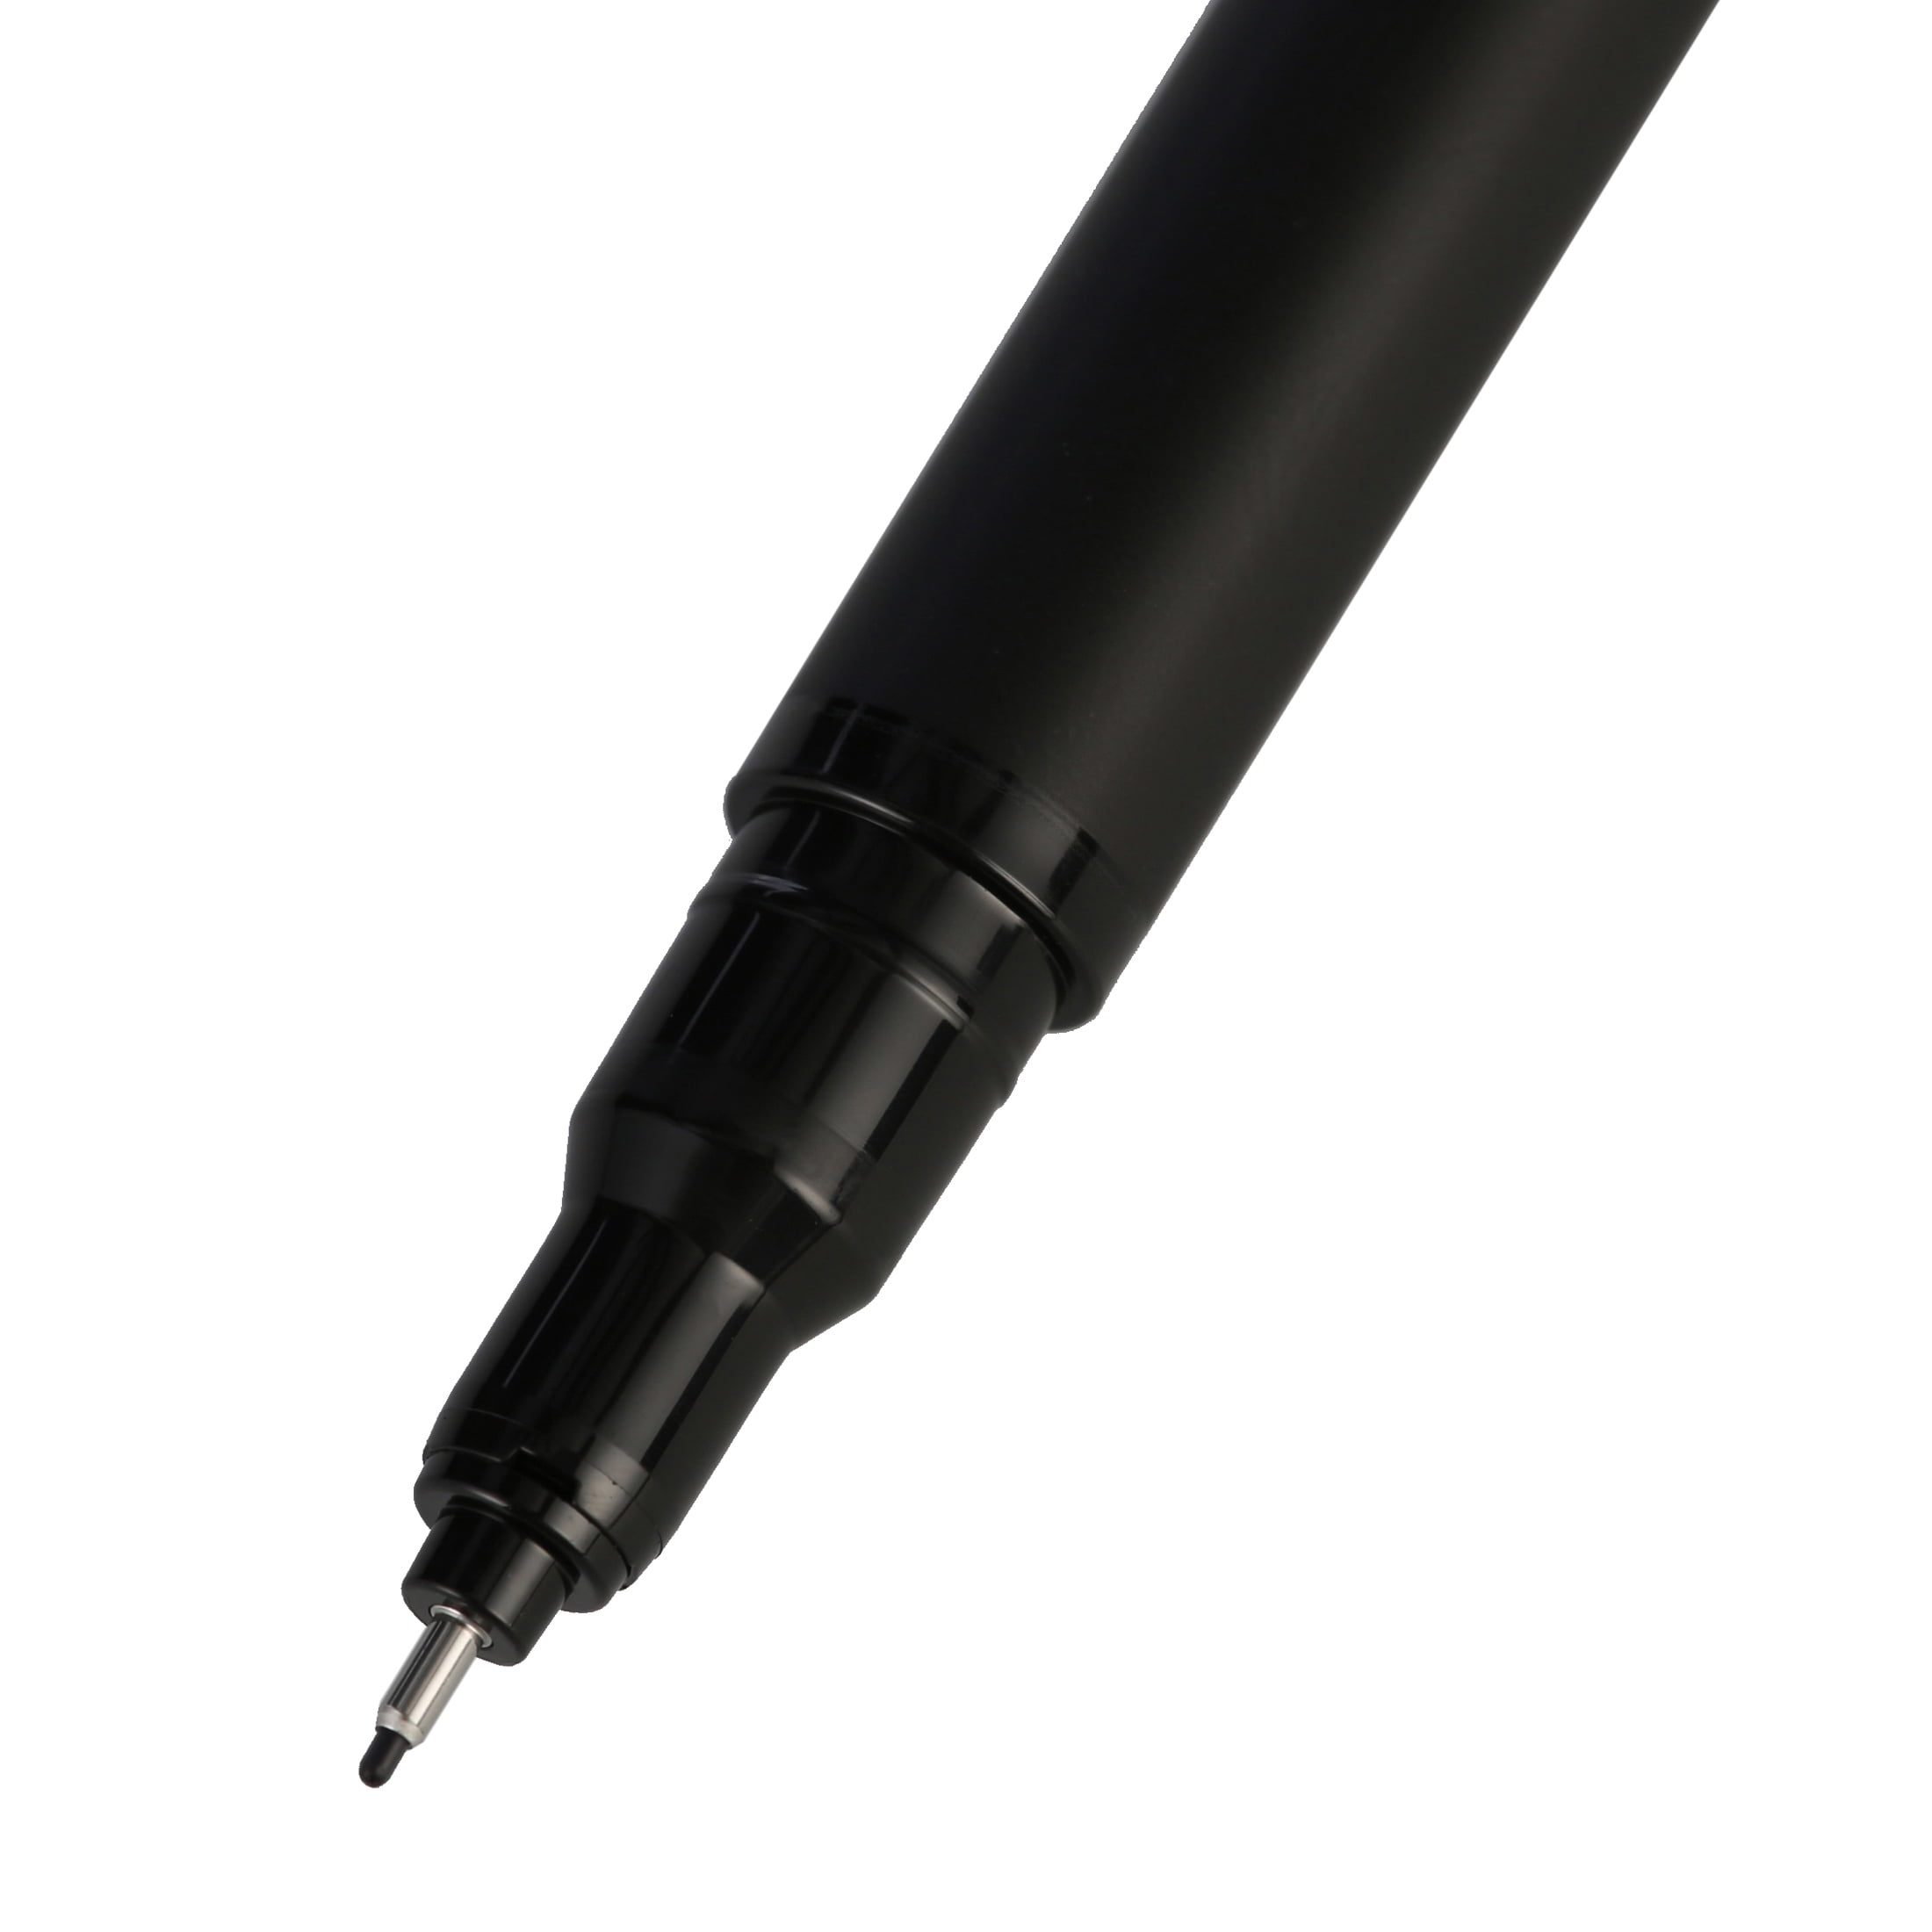 2 Fine Point BLACK Color Felt Tip MARKERS Permanent Magic Marker Ink Pen  Compare to Sharpie OPTIMUS Inc 